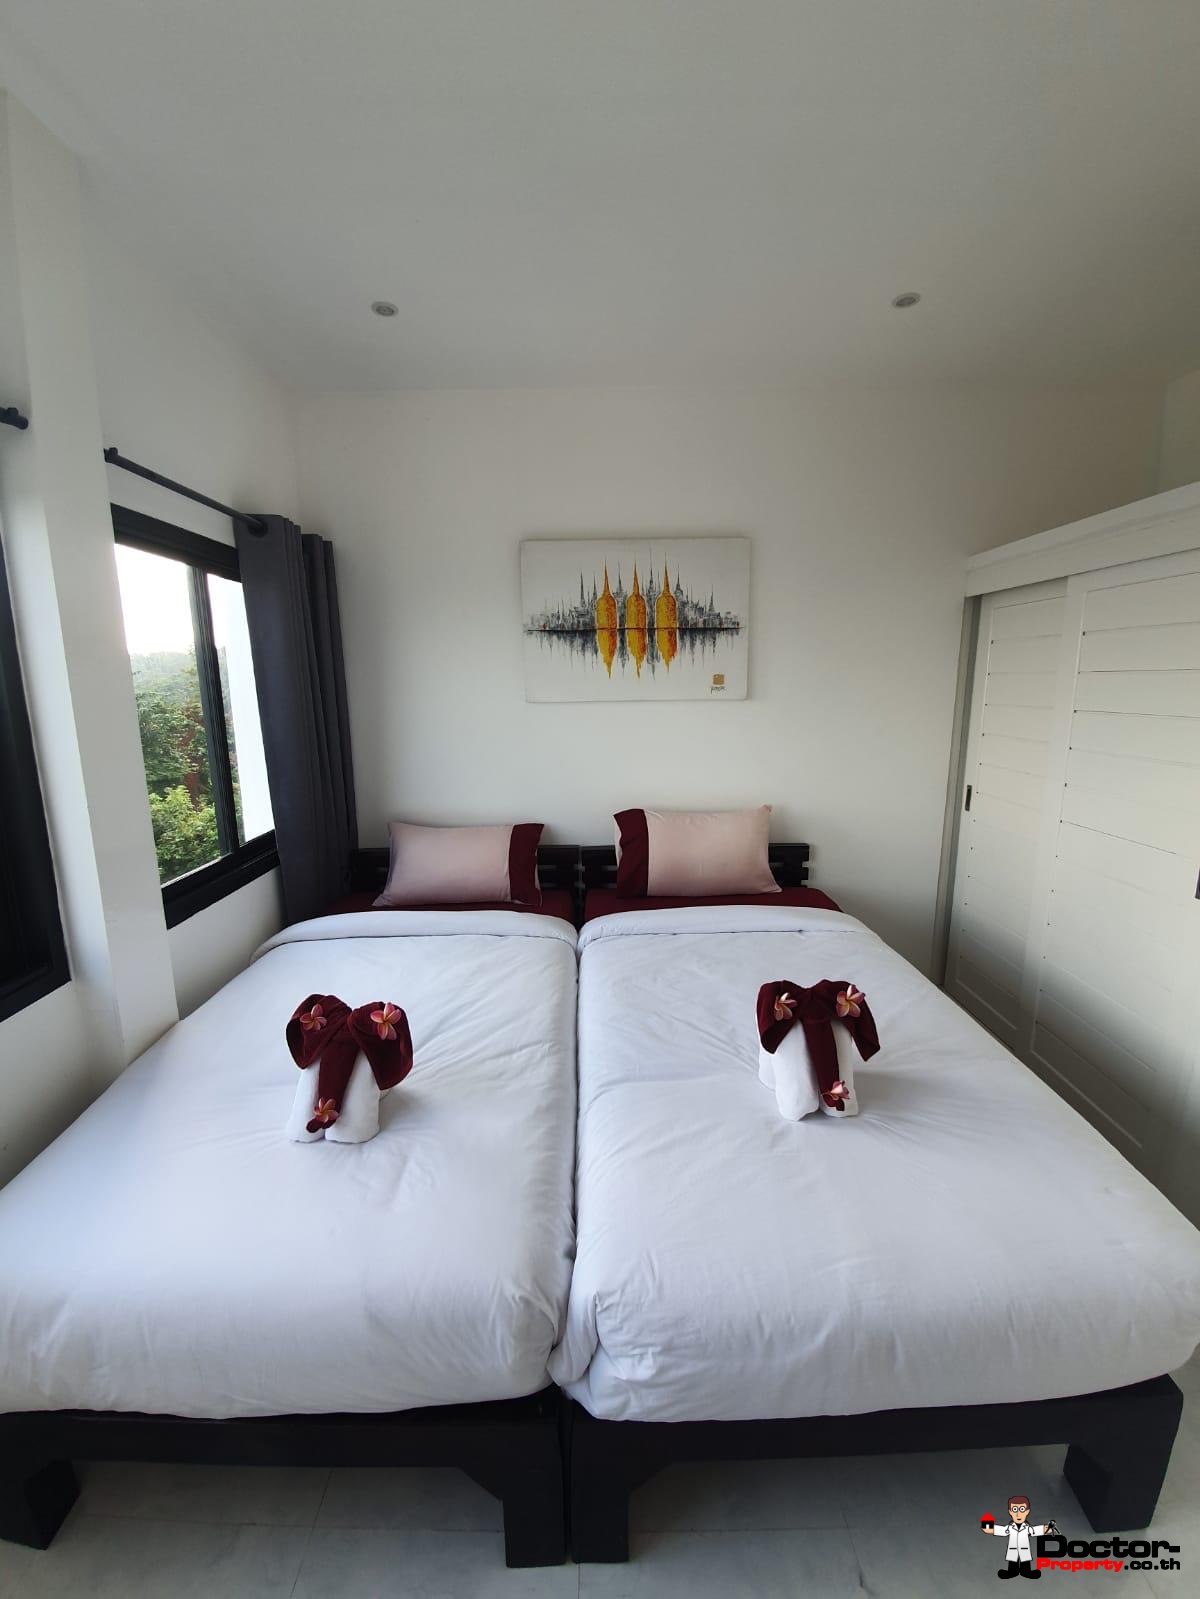 2 Bedroom Apartment with Amazing Panoramic Sea View - Lamai, Koh Samui - For Sale